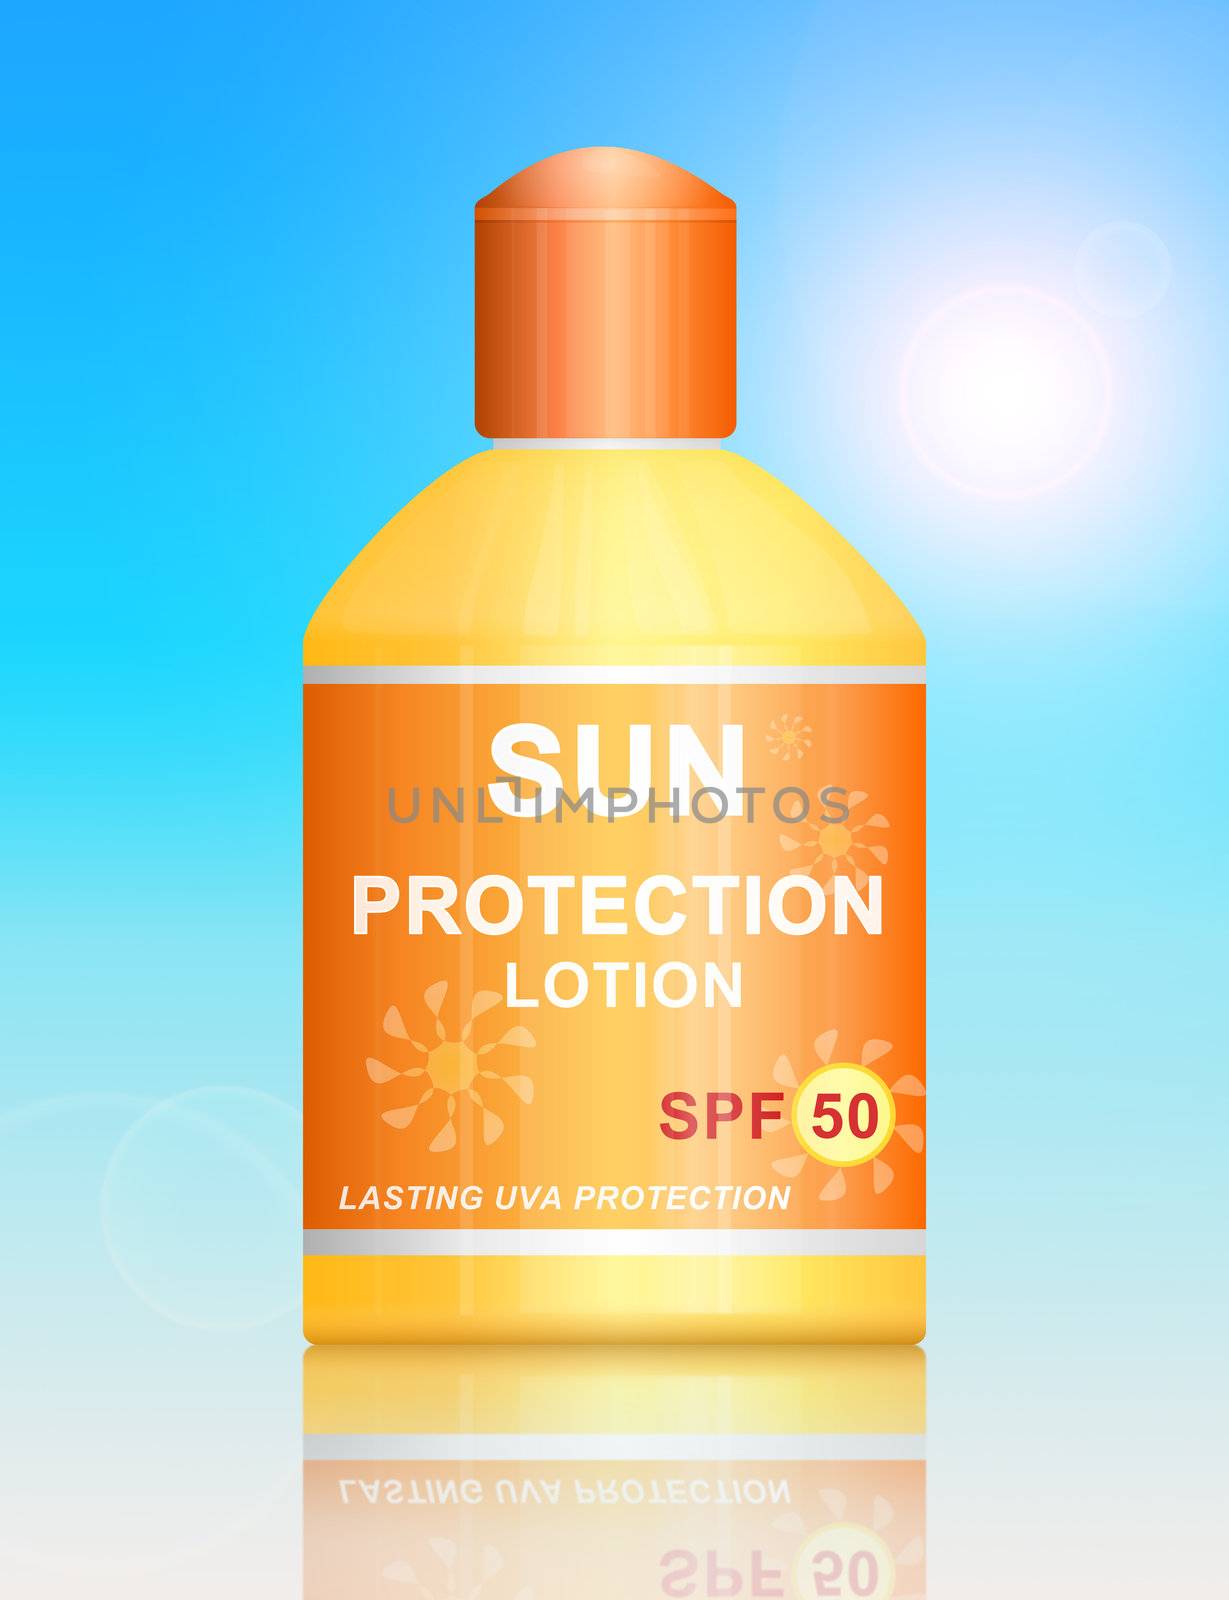 Illustration depicting a single uva SPF 50 sun protection lotion bottle arranged over vibrant blue light effect background.